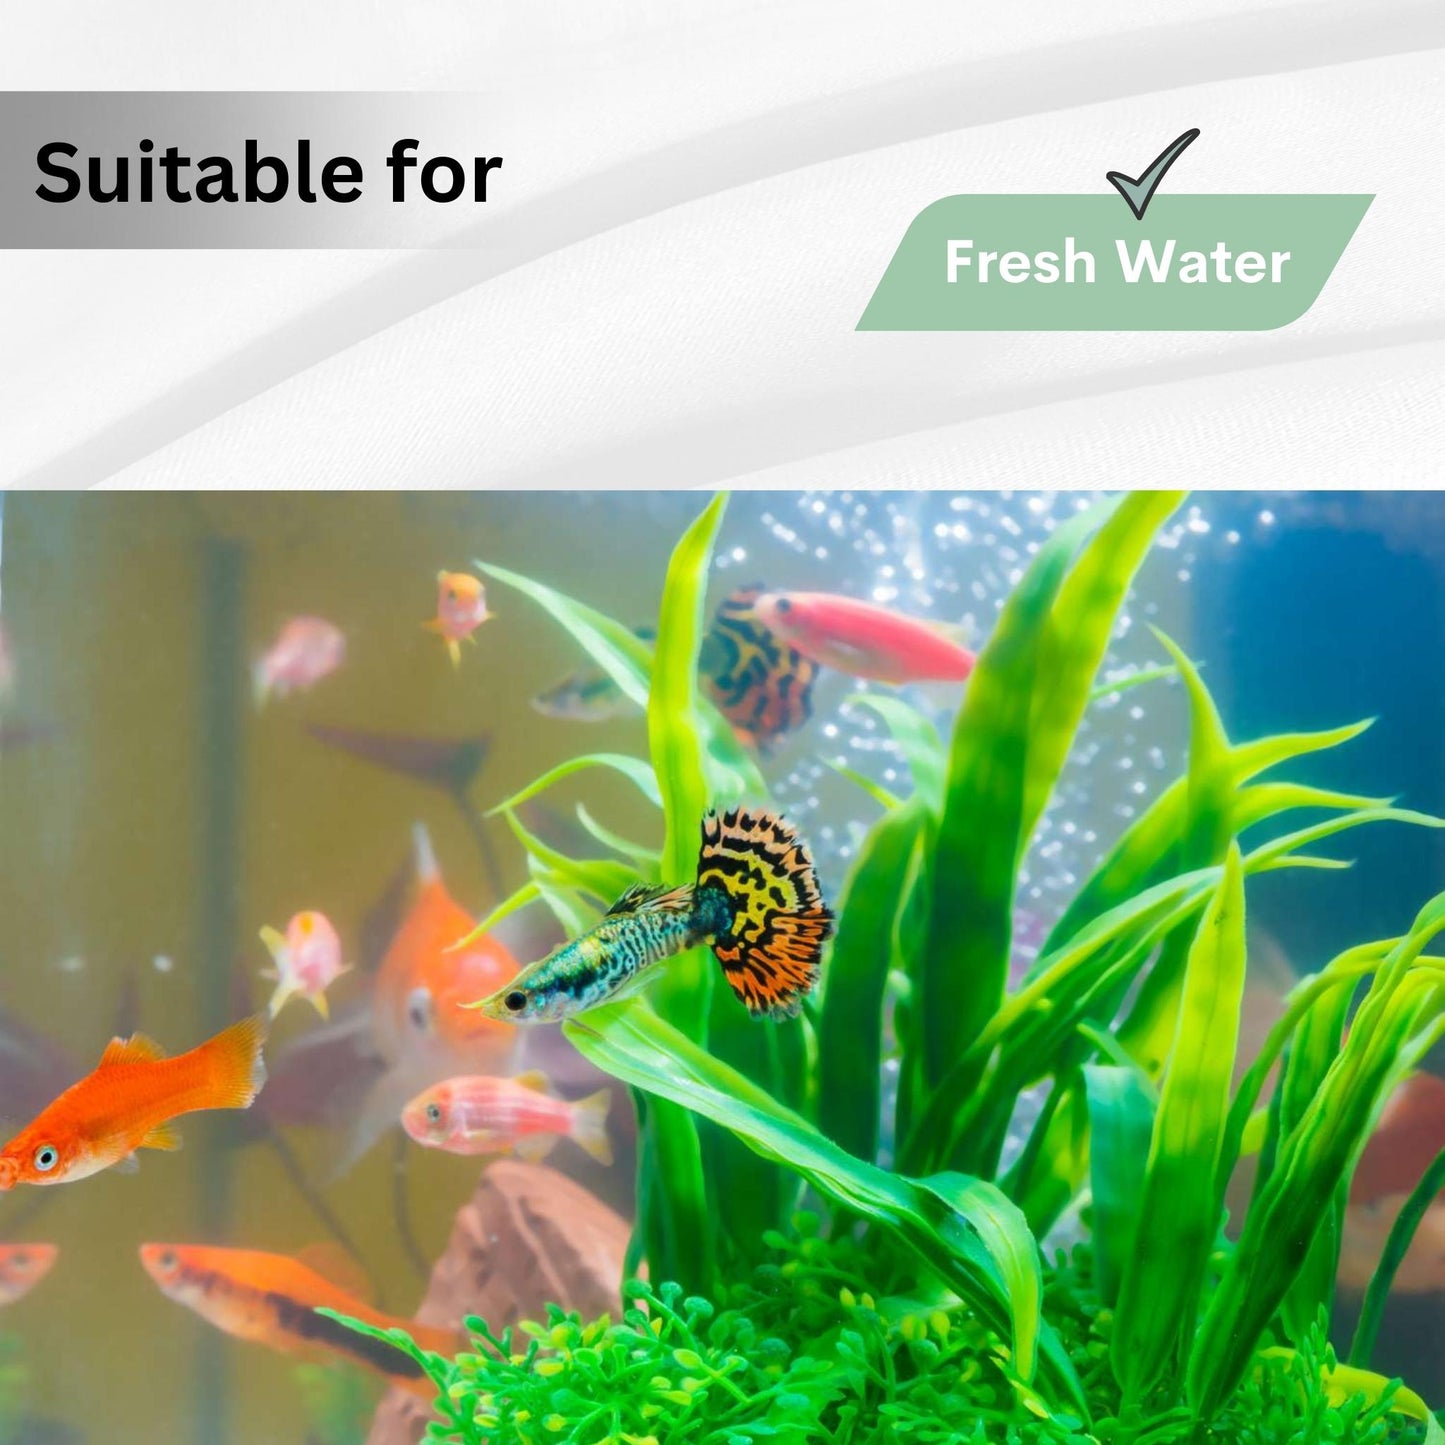 Aquatic Remedies General Cure - 60ml | For Fresh Water